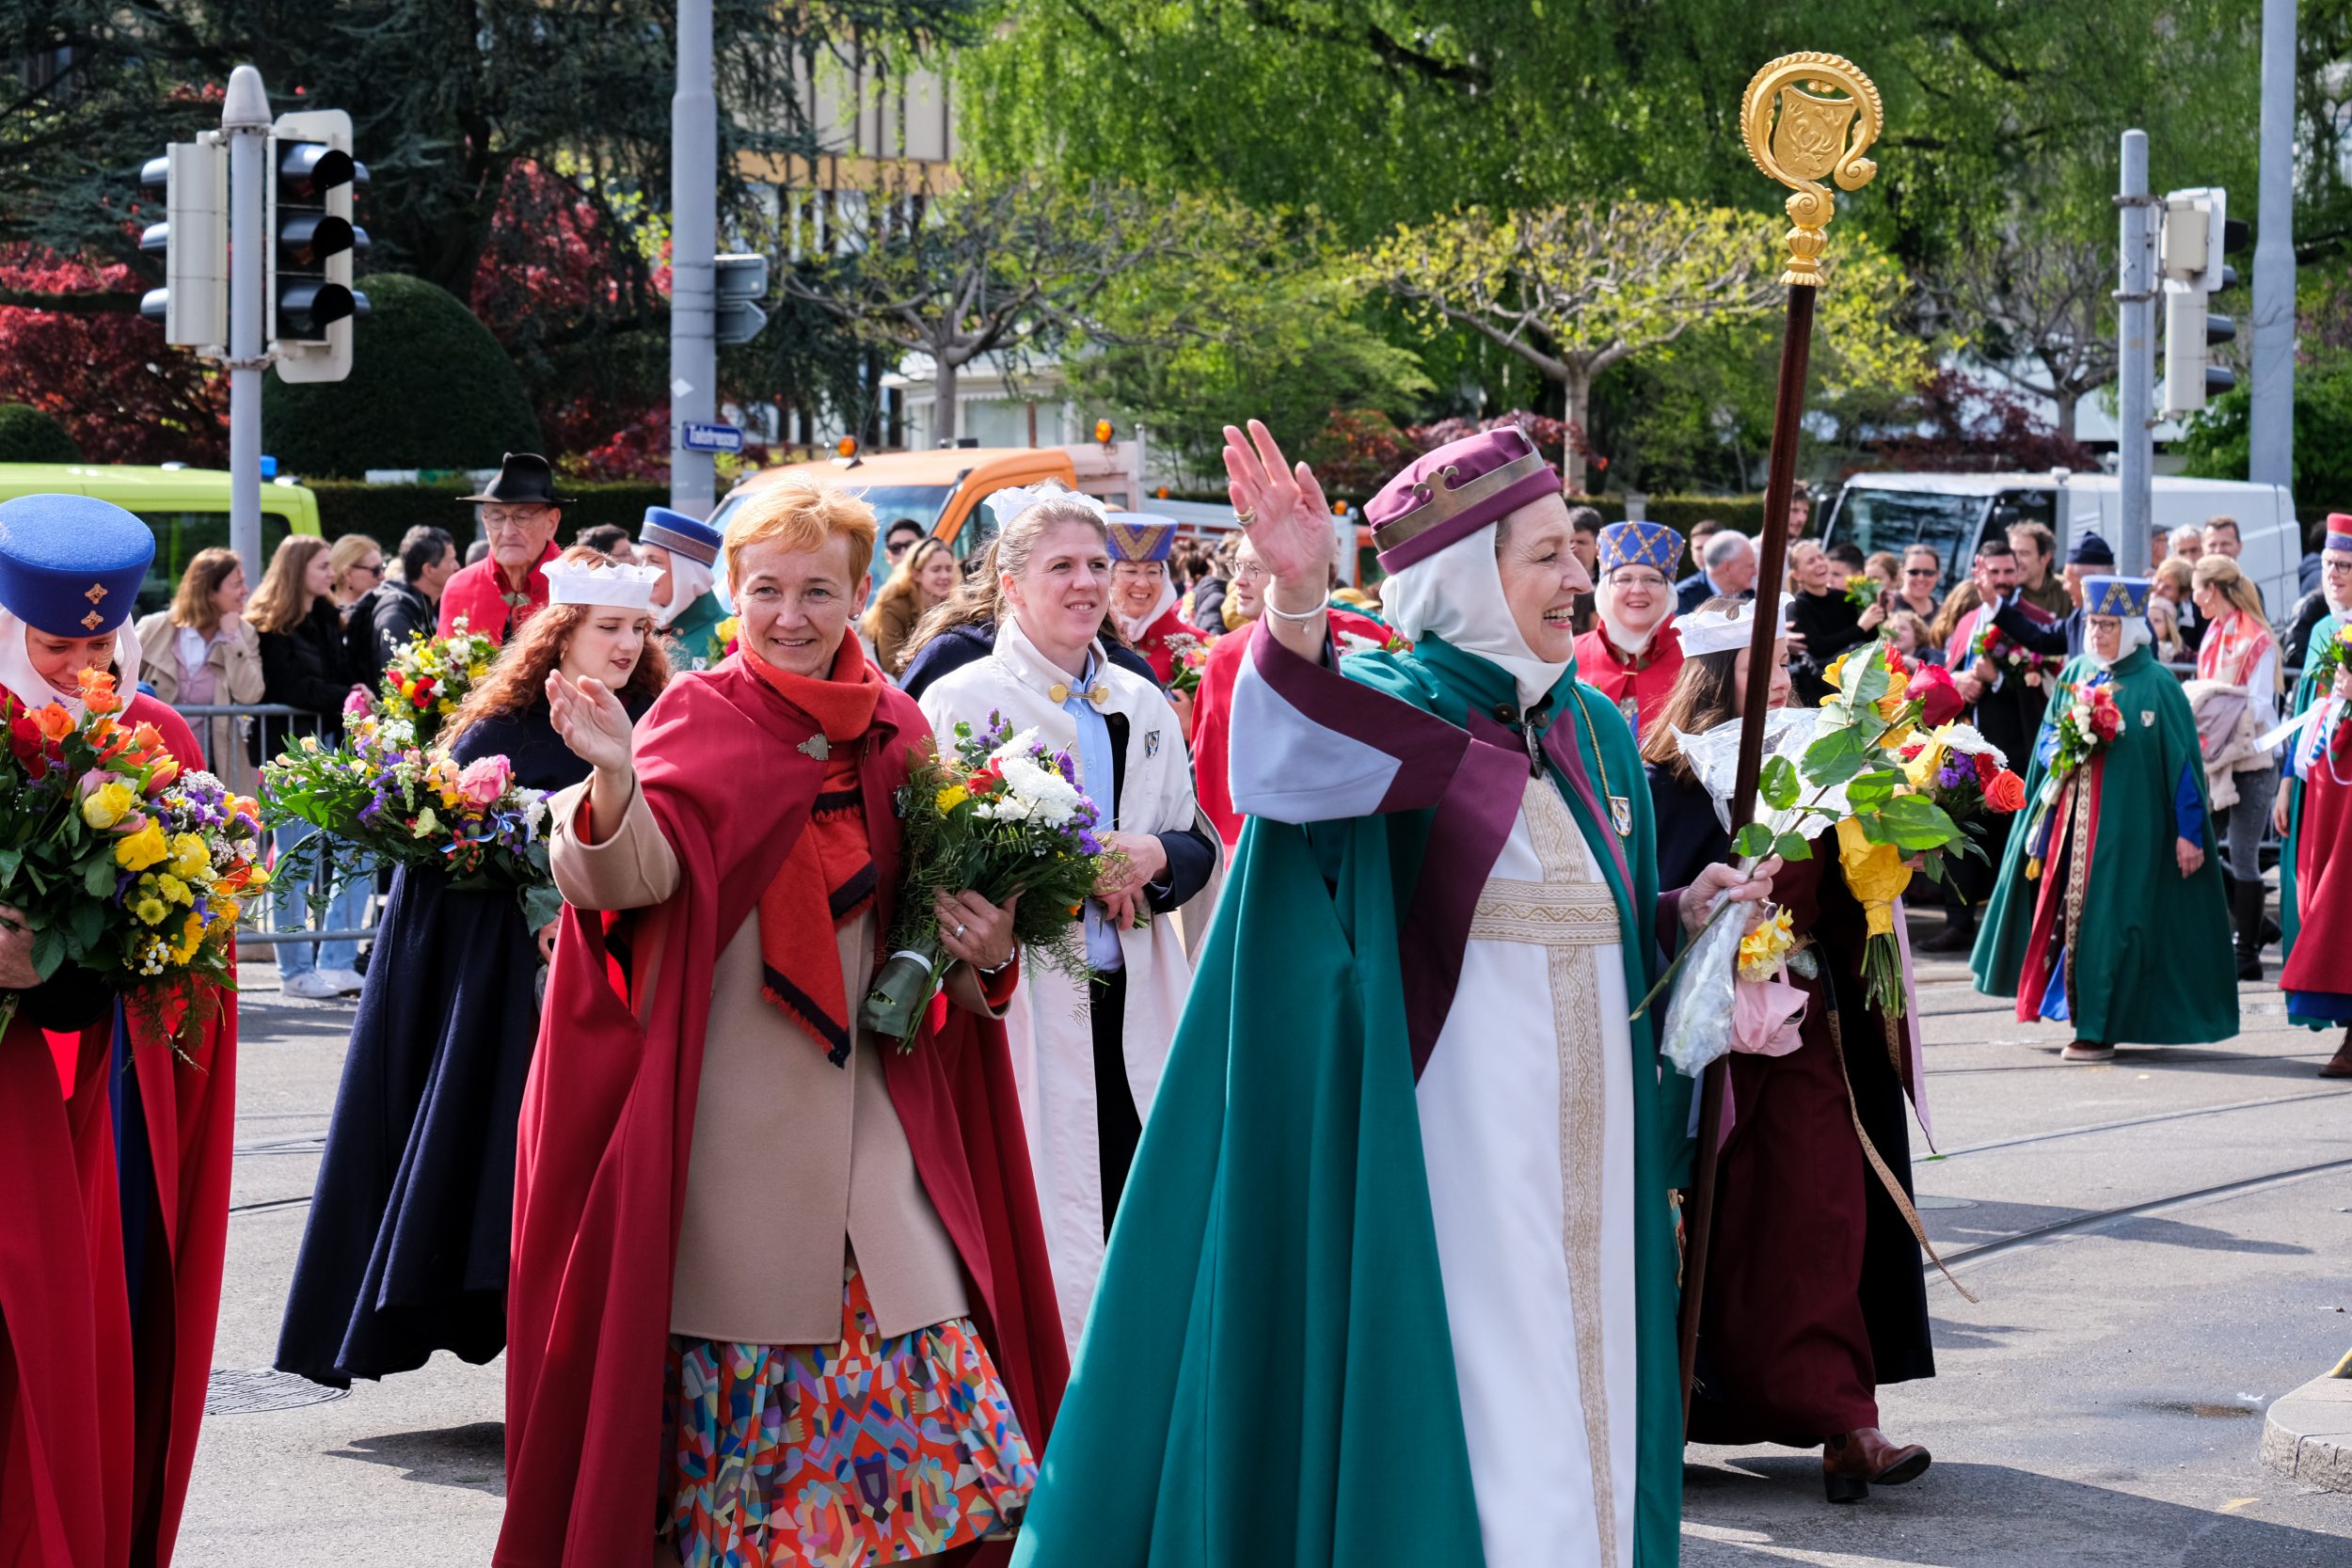 Sfilata in costumi storici alla festa Sächsilüüte, Zurigo